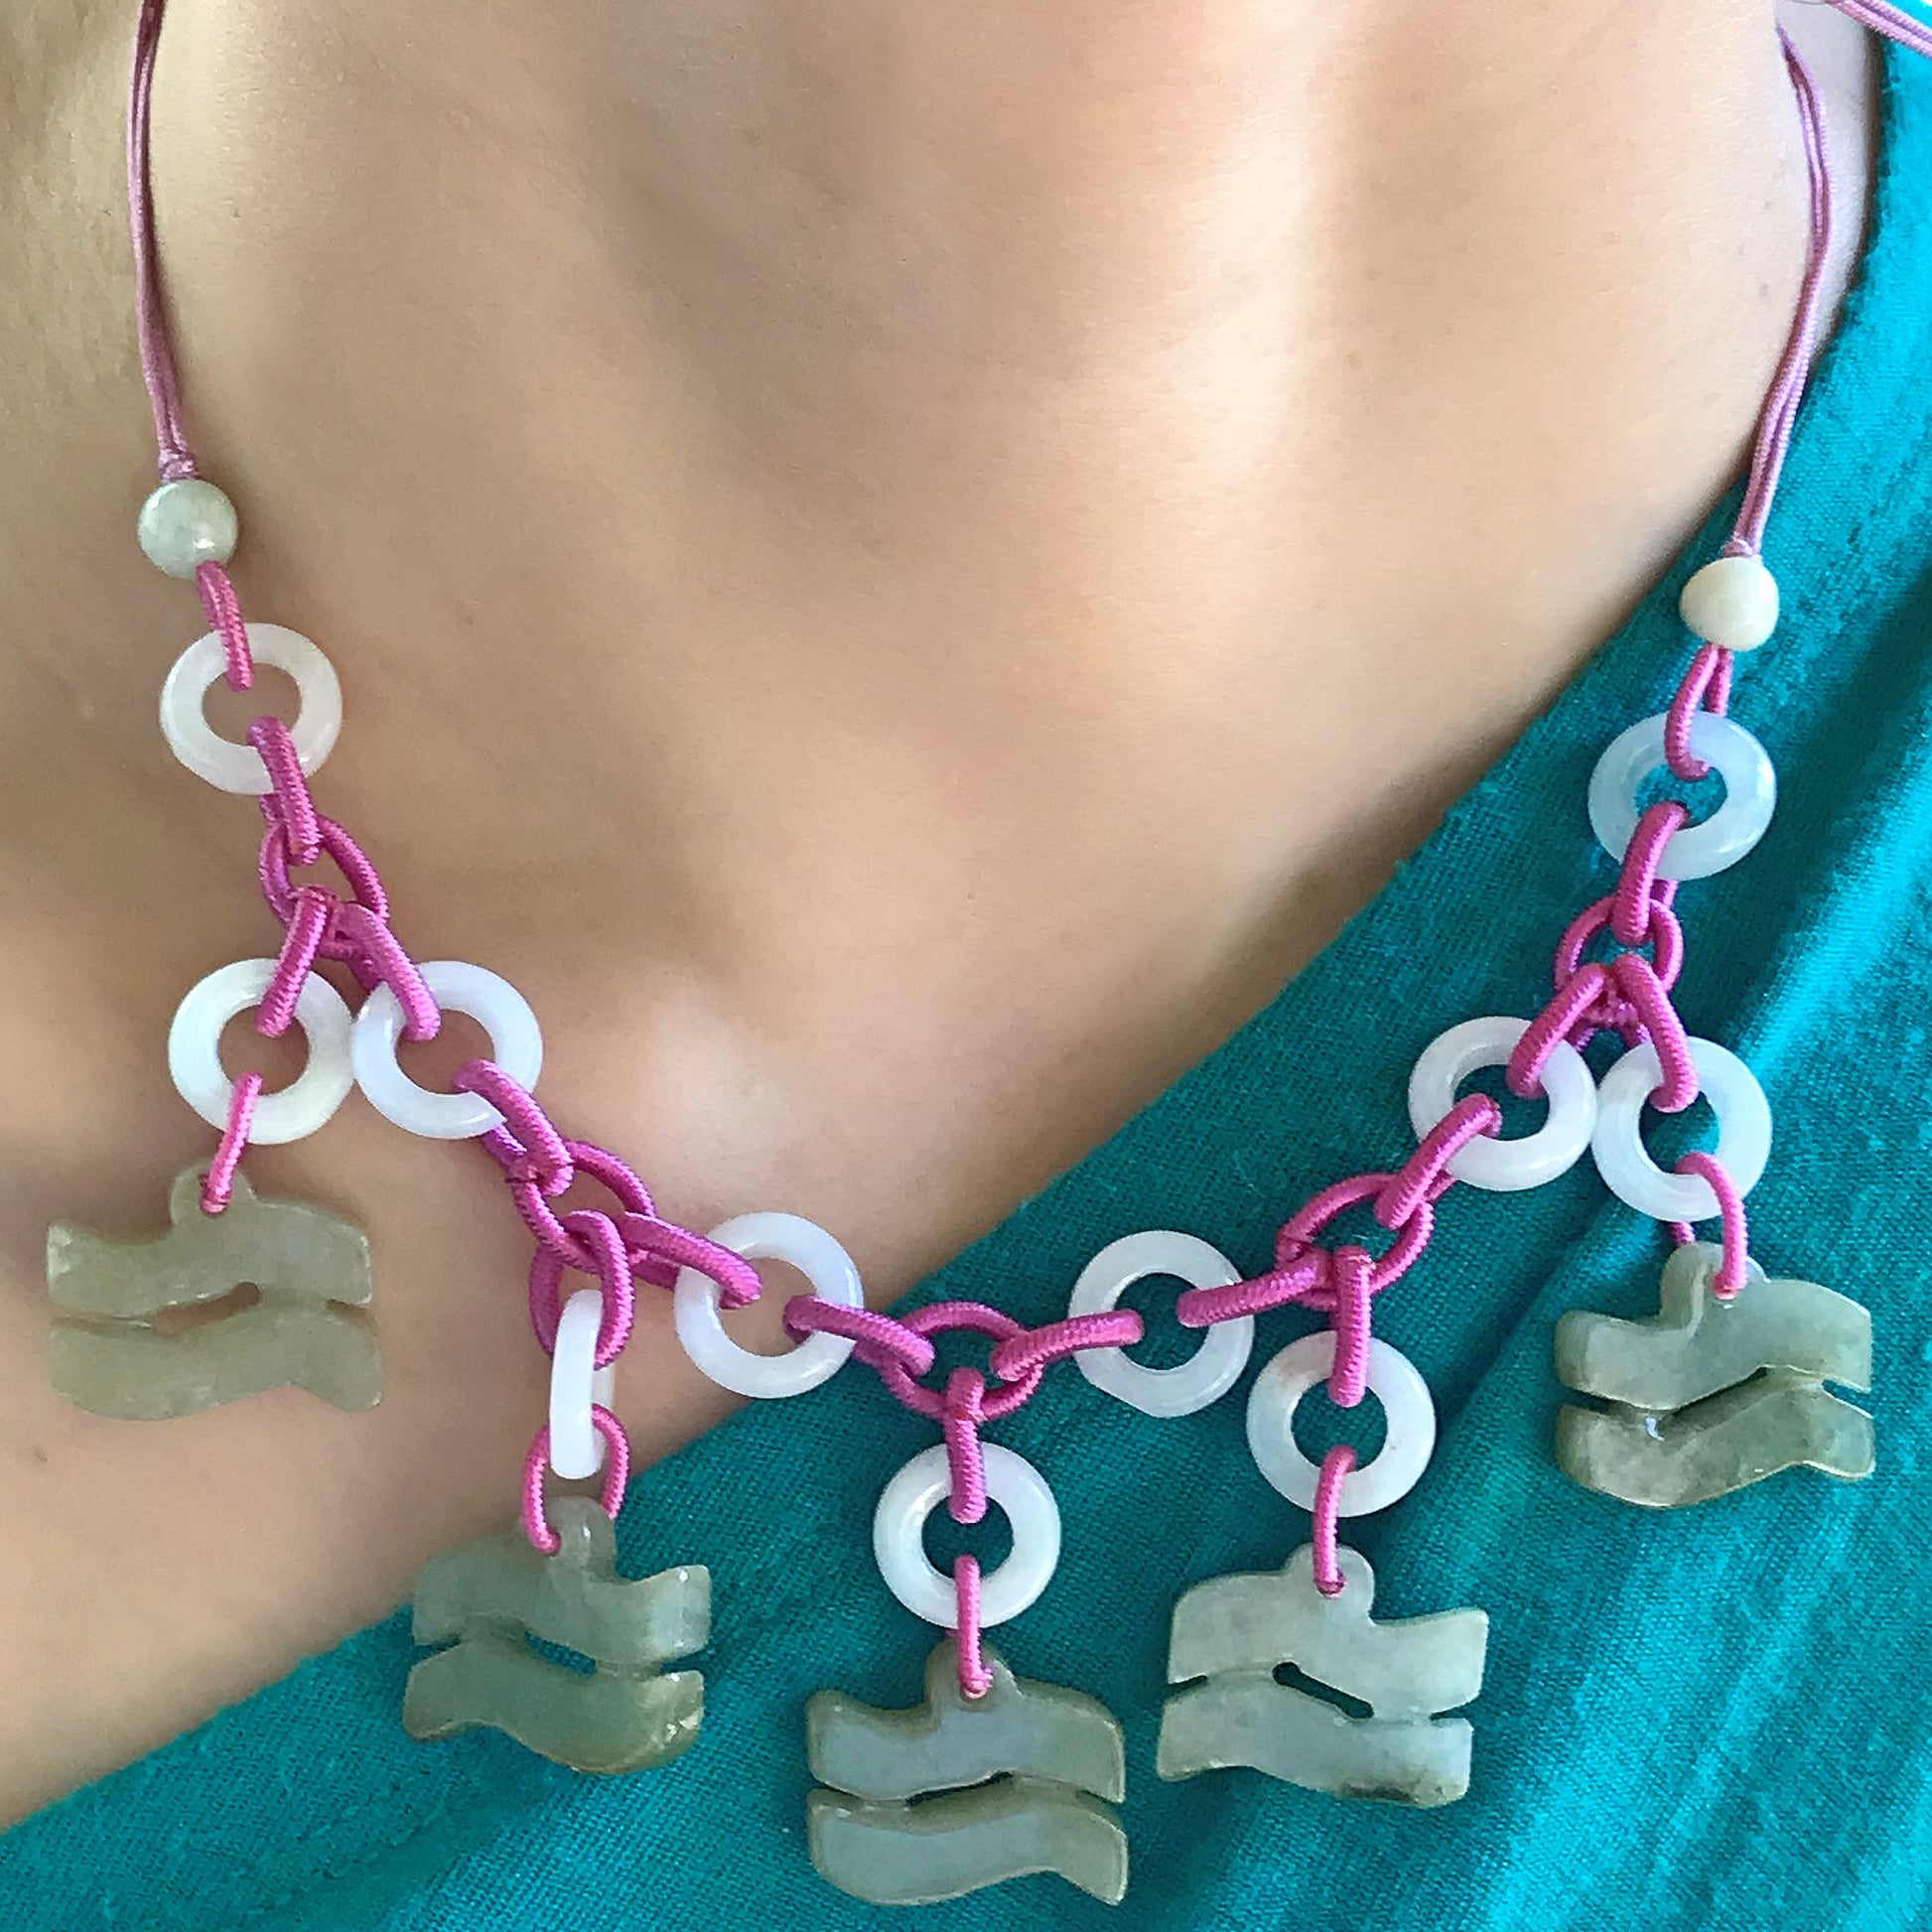 Aquarius Astrology Handmade Jade Necklace Pendant with Purple Cord